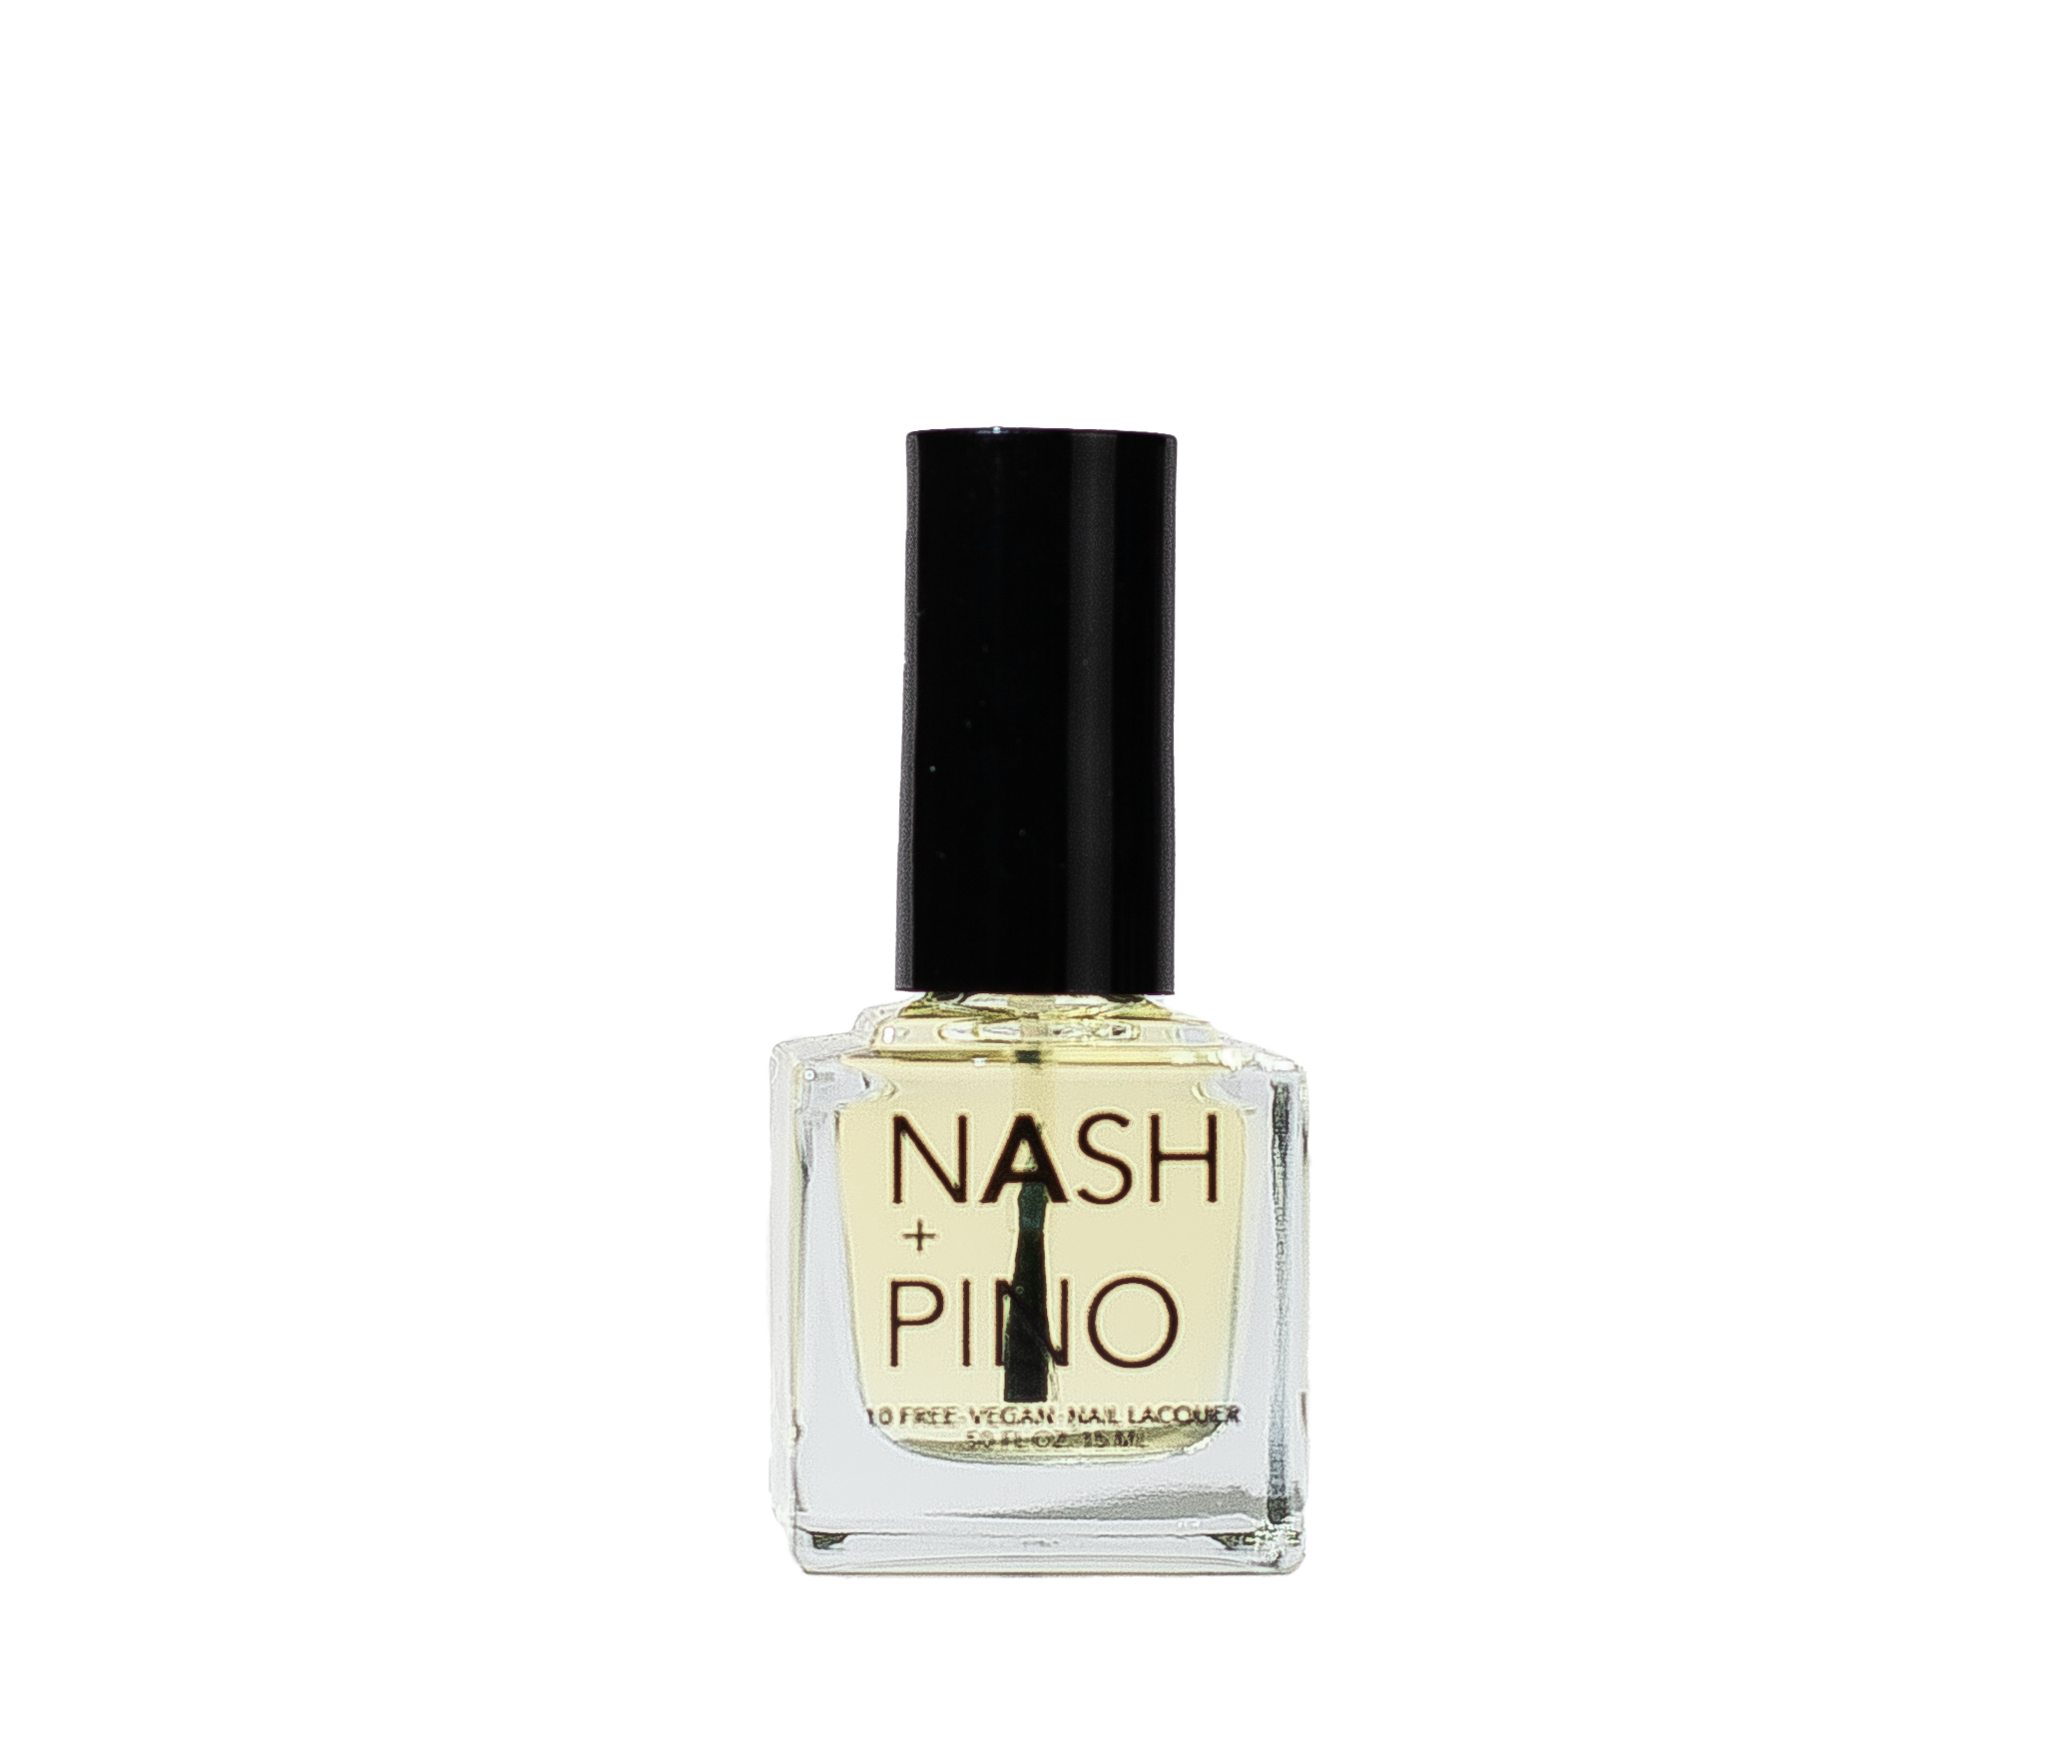 Nash + Pino Hydrate Cuticle Oil